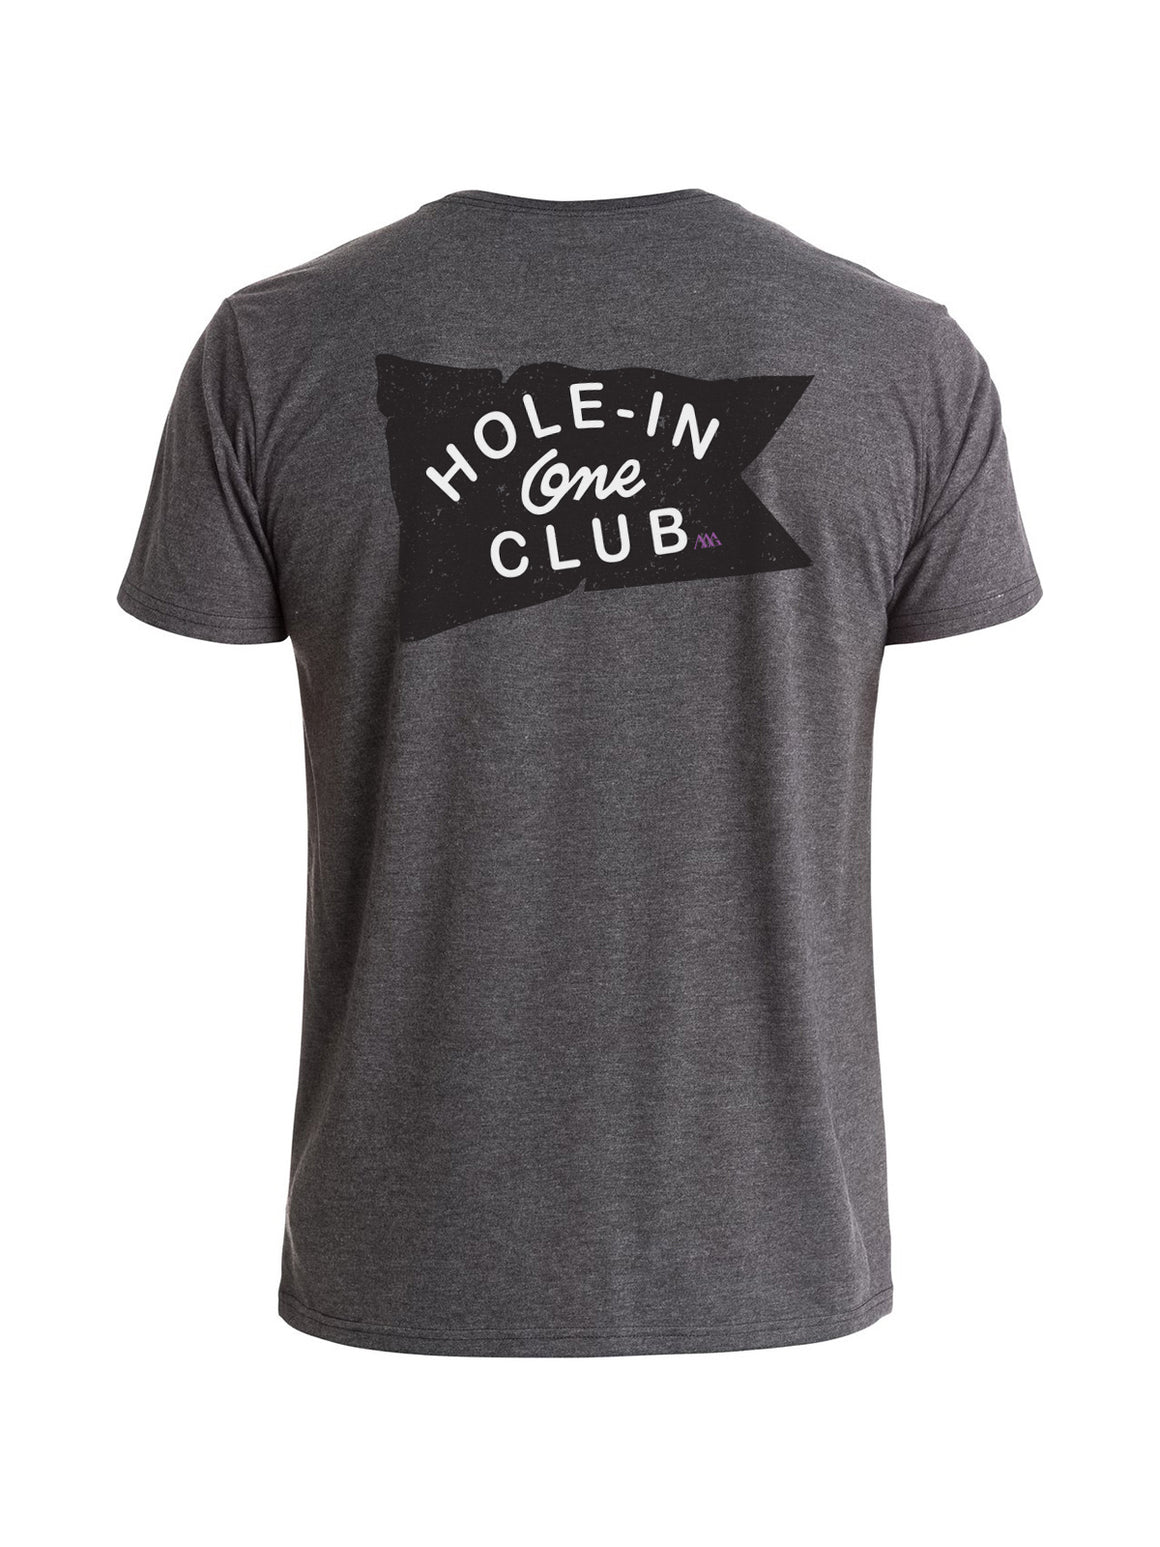 Hole-In-One Club Tee Shirt - Charcoal Heather (Black / Salt)